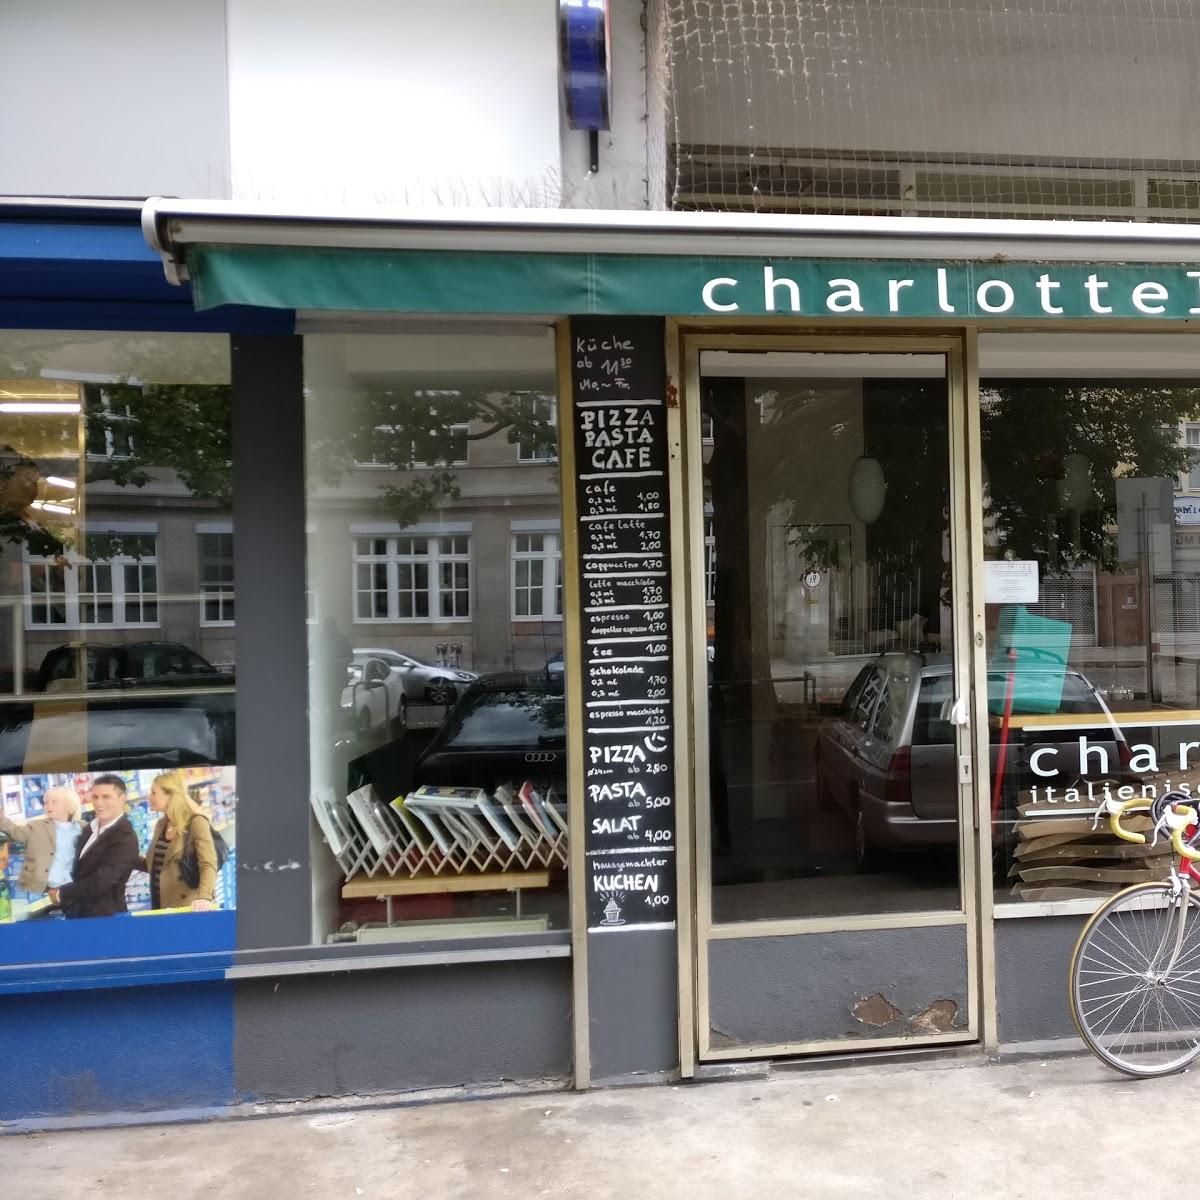 Restaurant "Charlotte 1" in Berlin